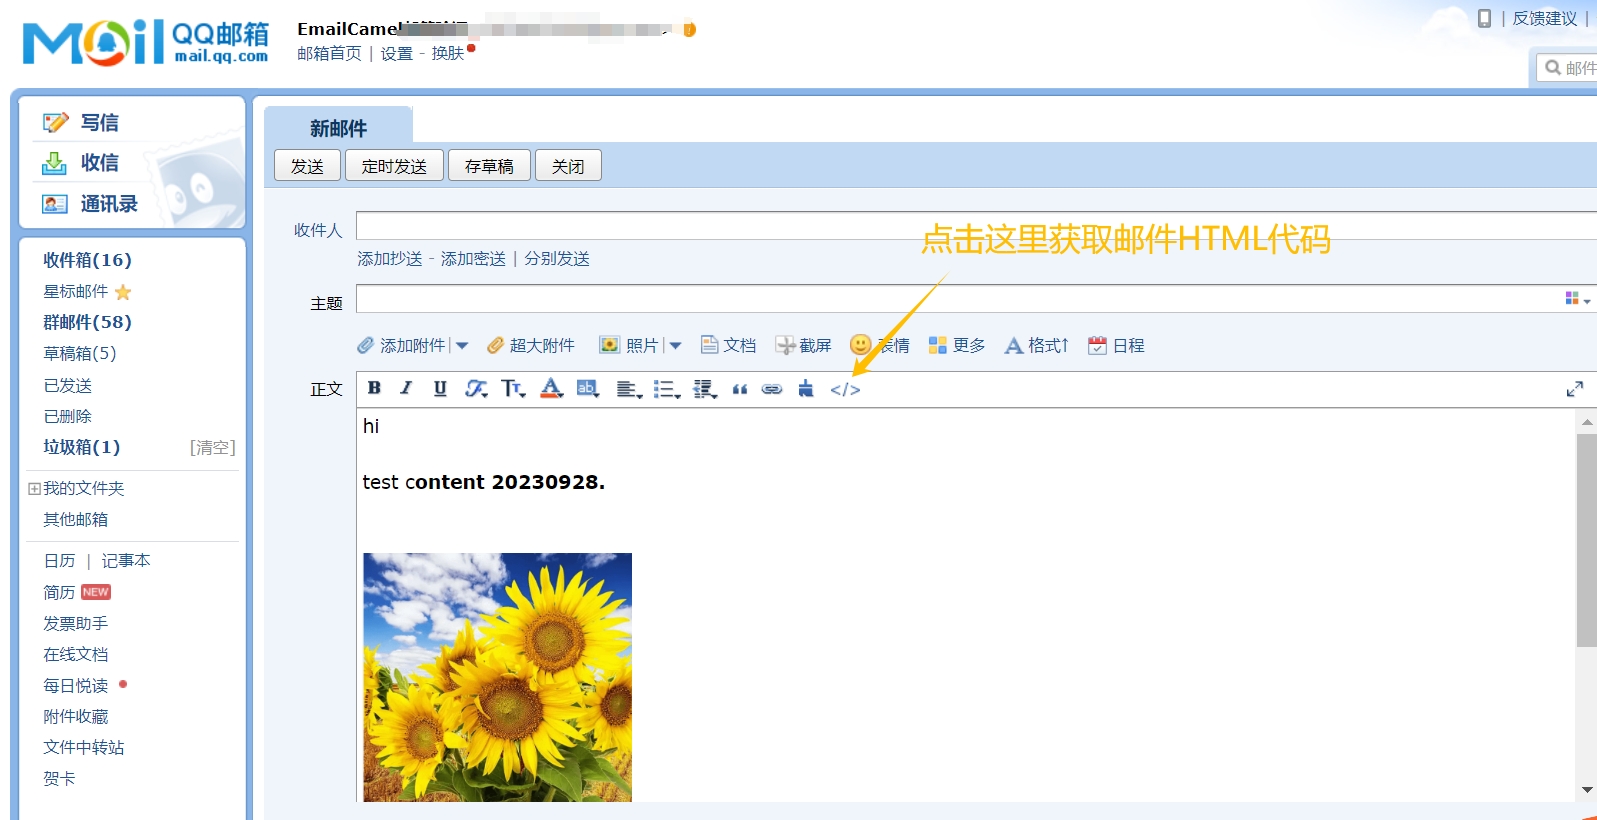 QQ邮件模板迁移到EmailCamel